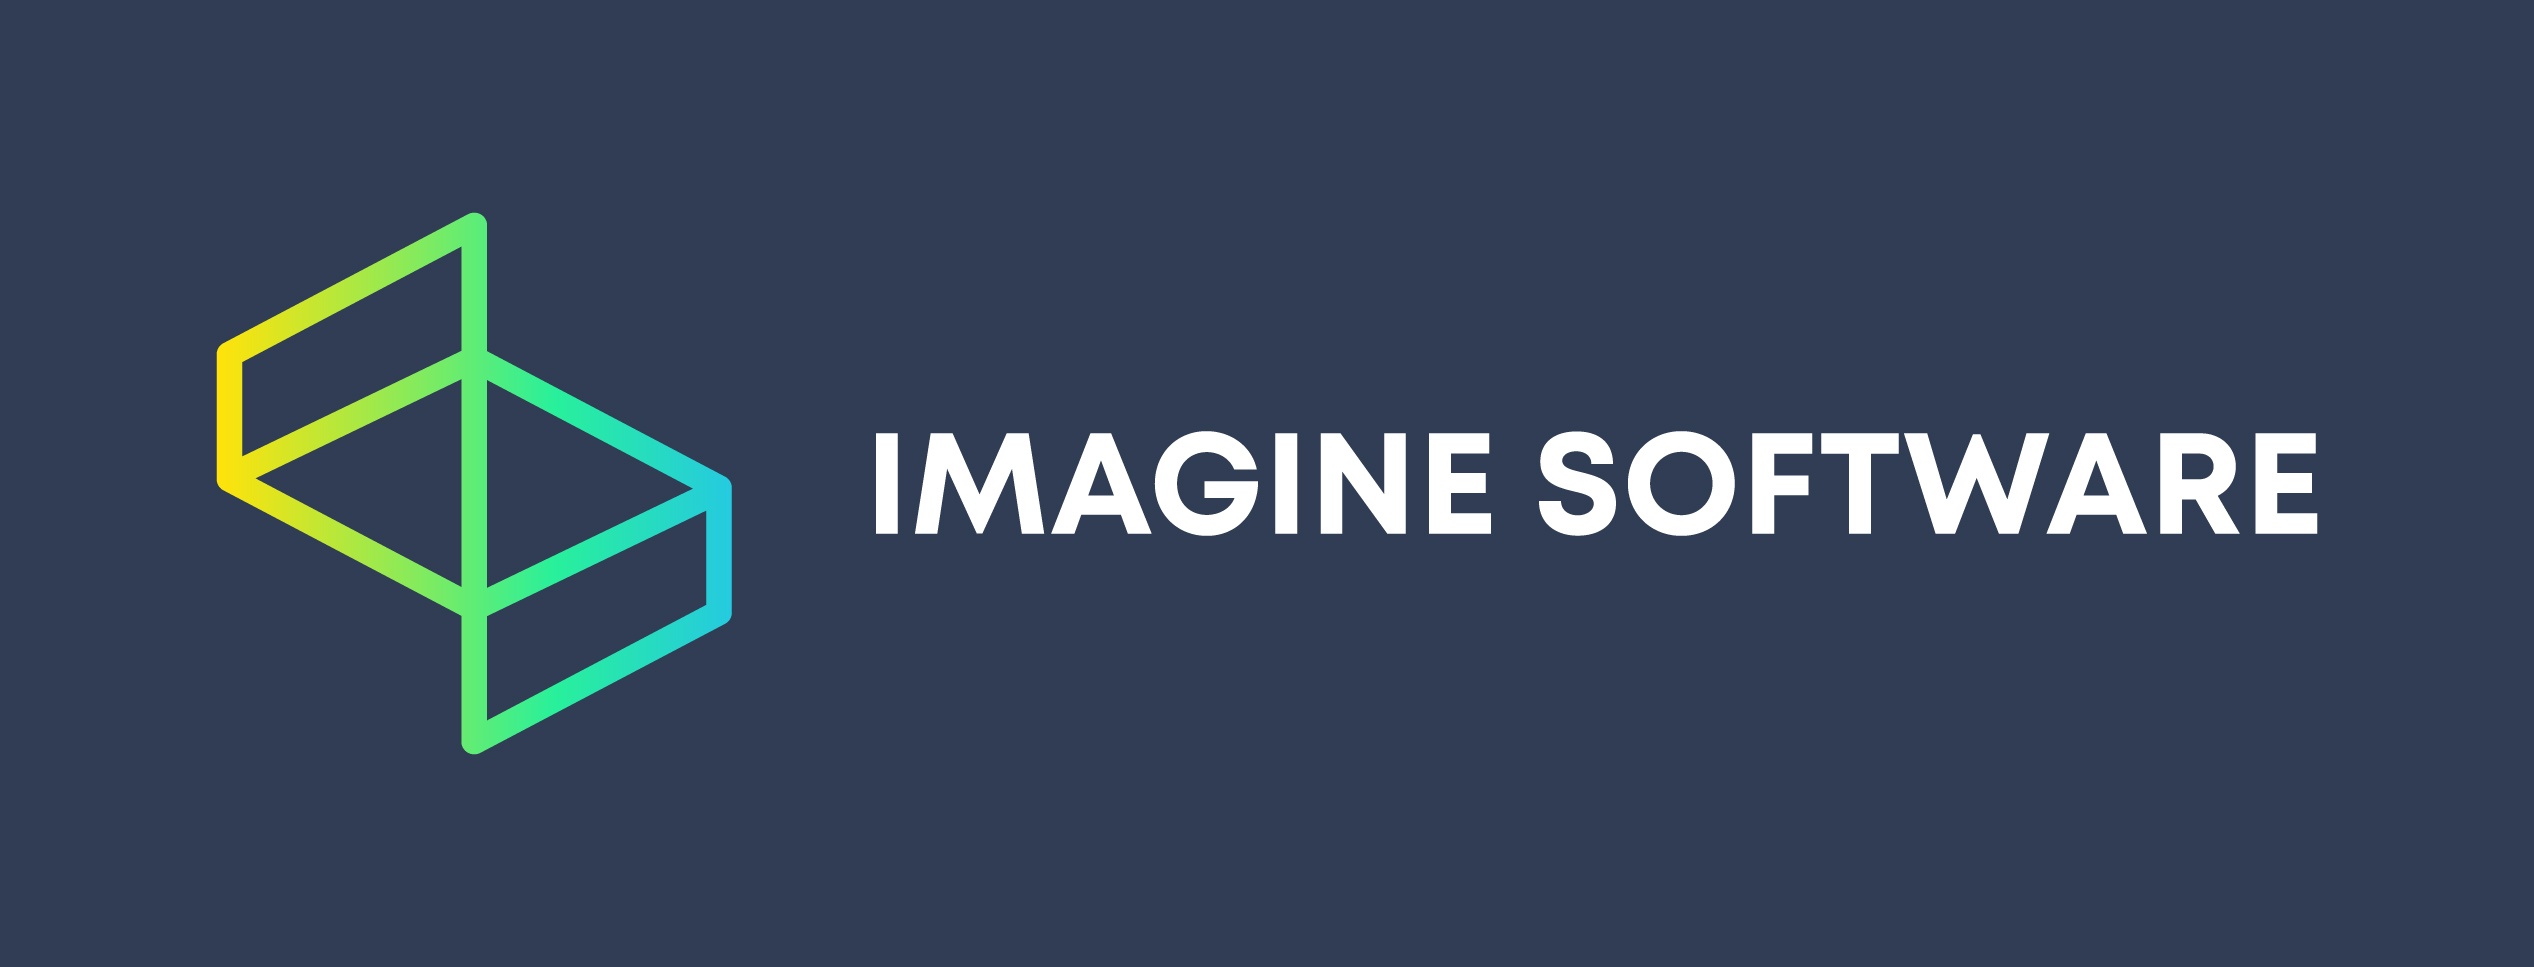 logo-imagine-software.jpg